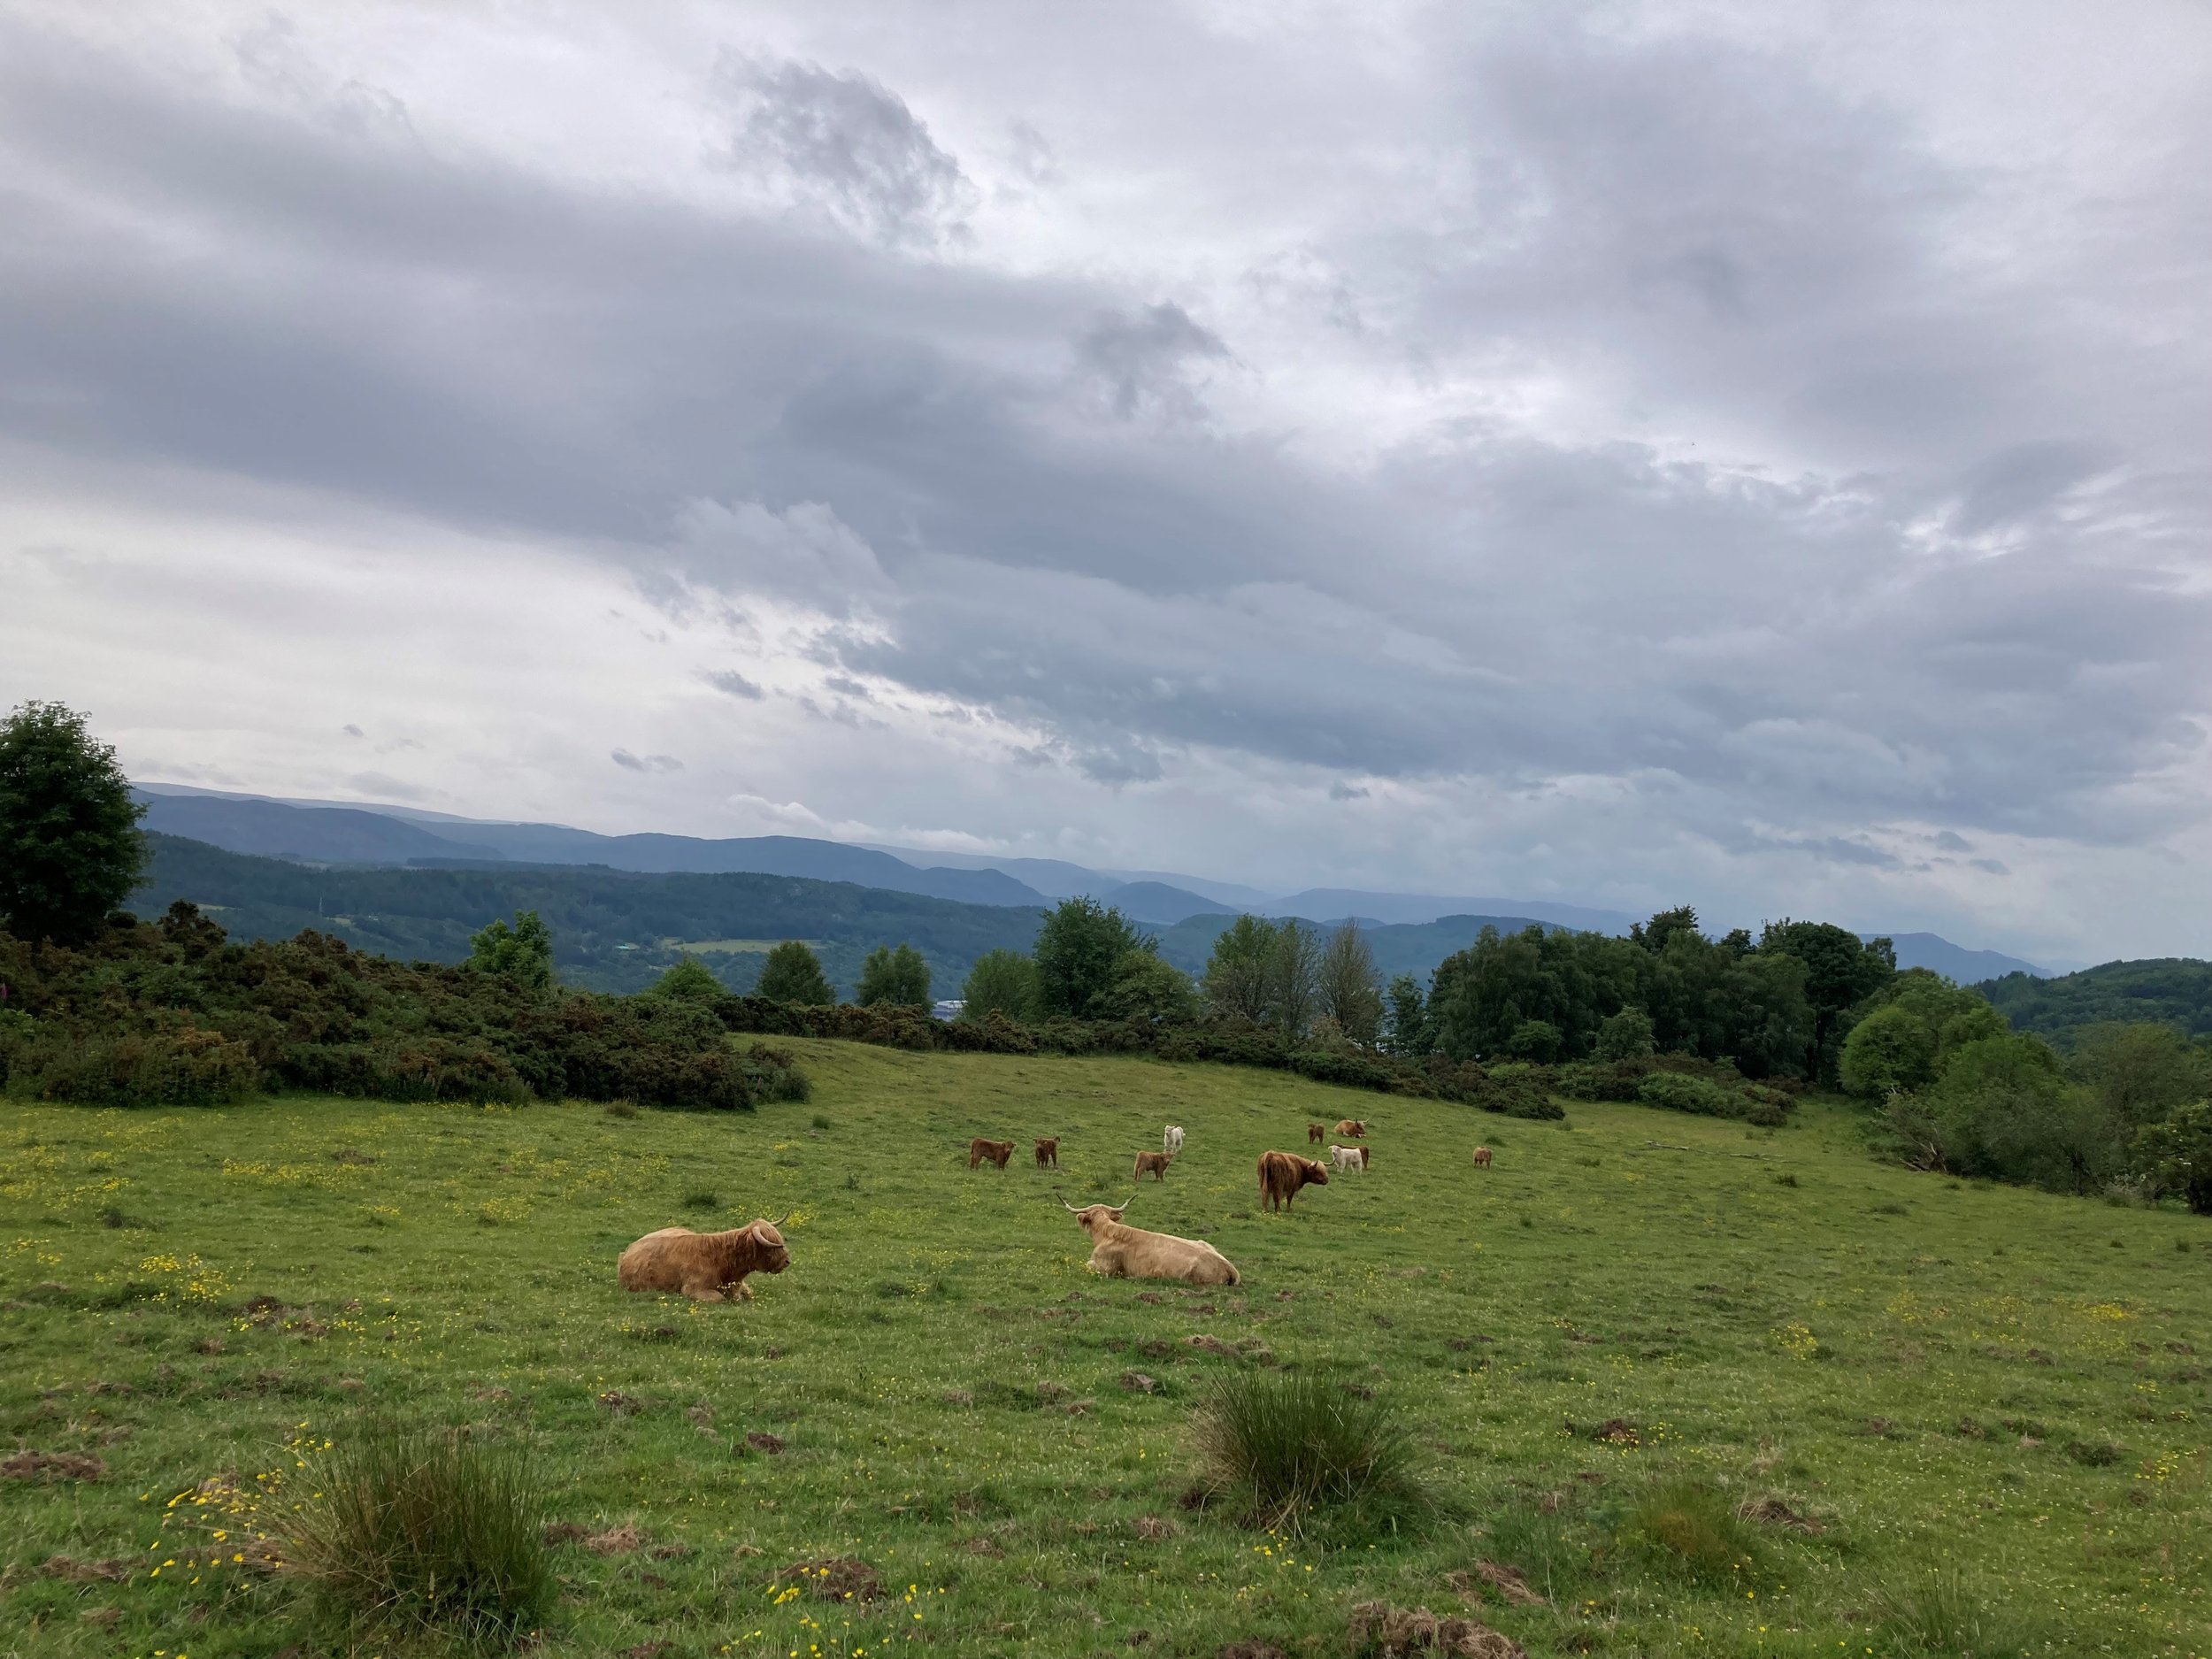 Highland cows and calves